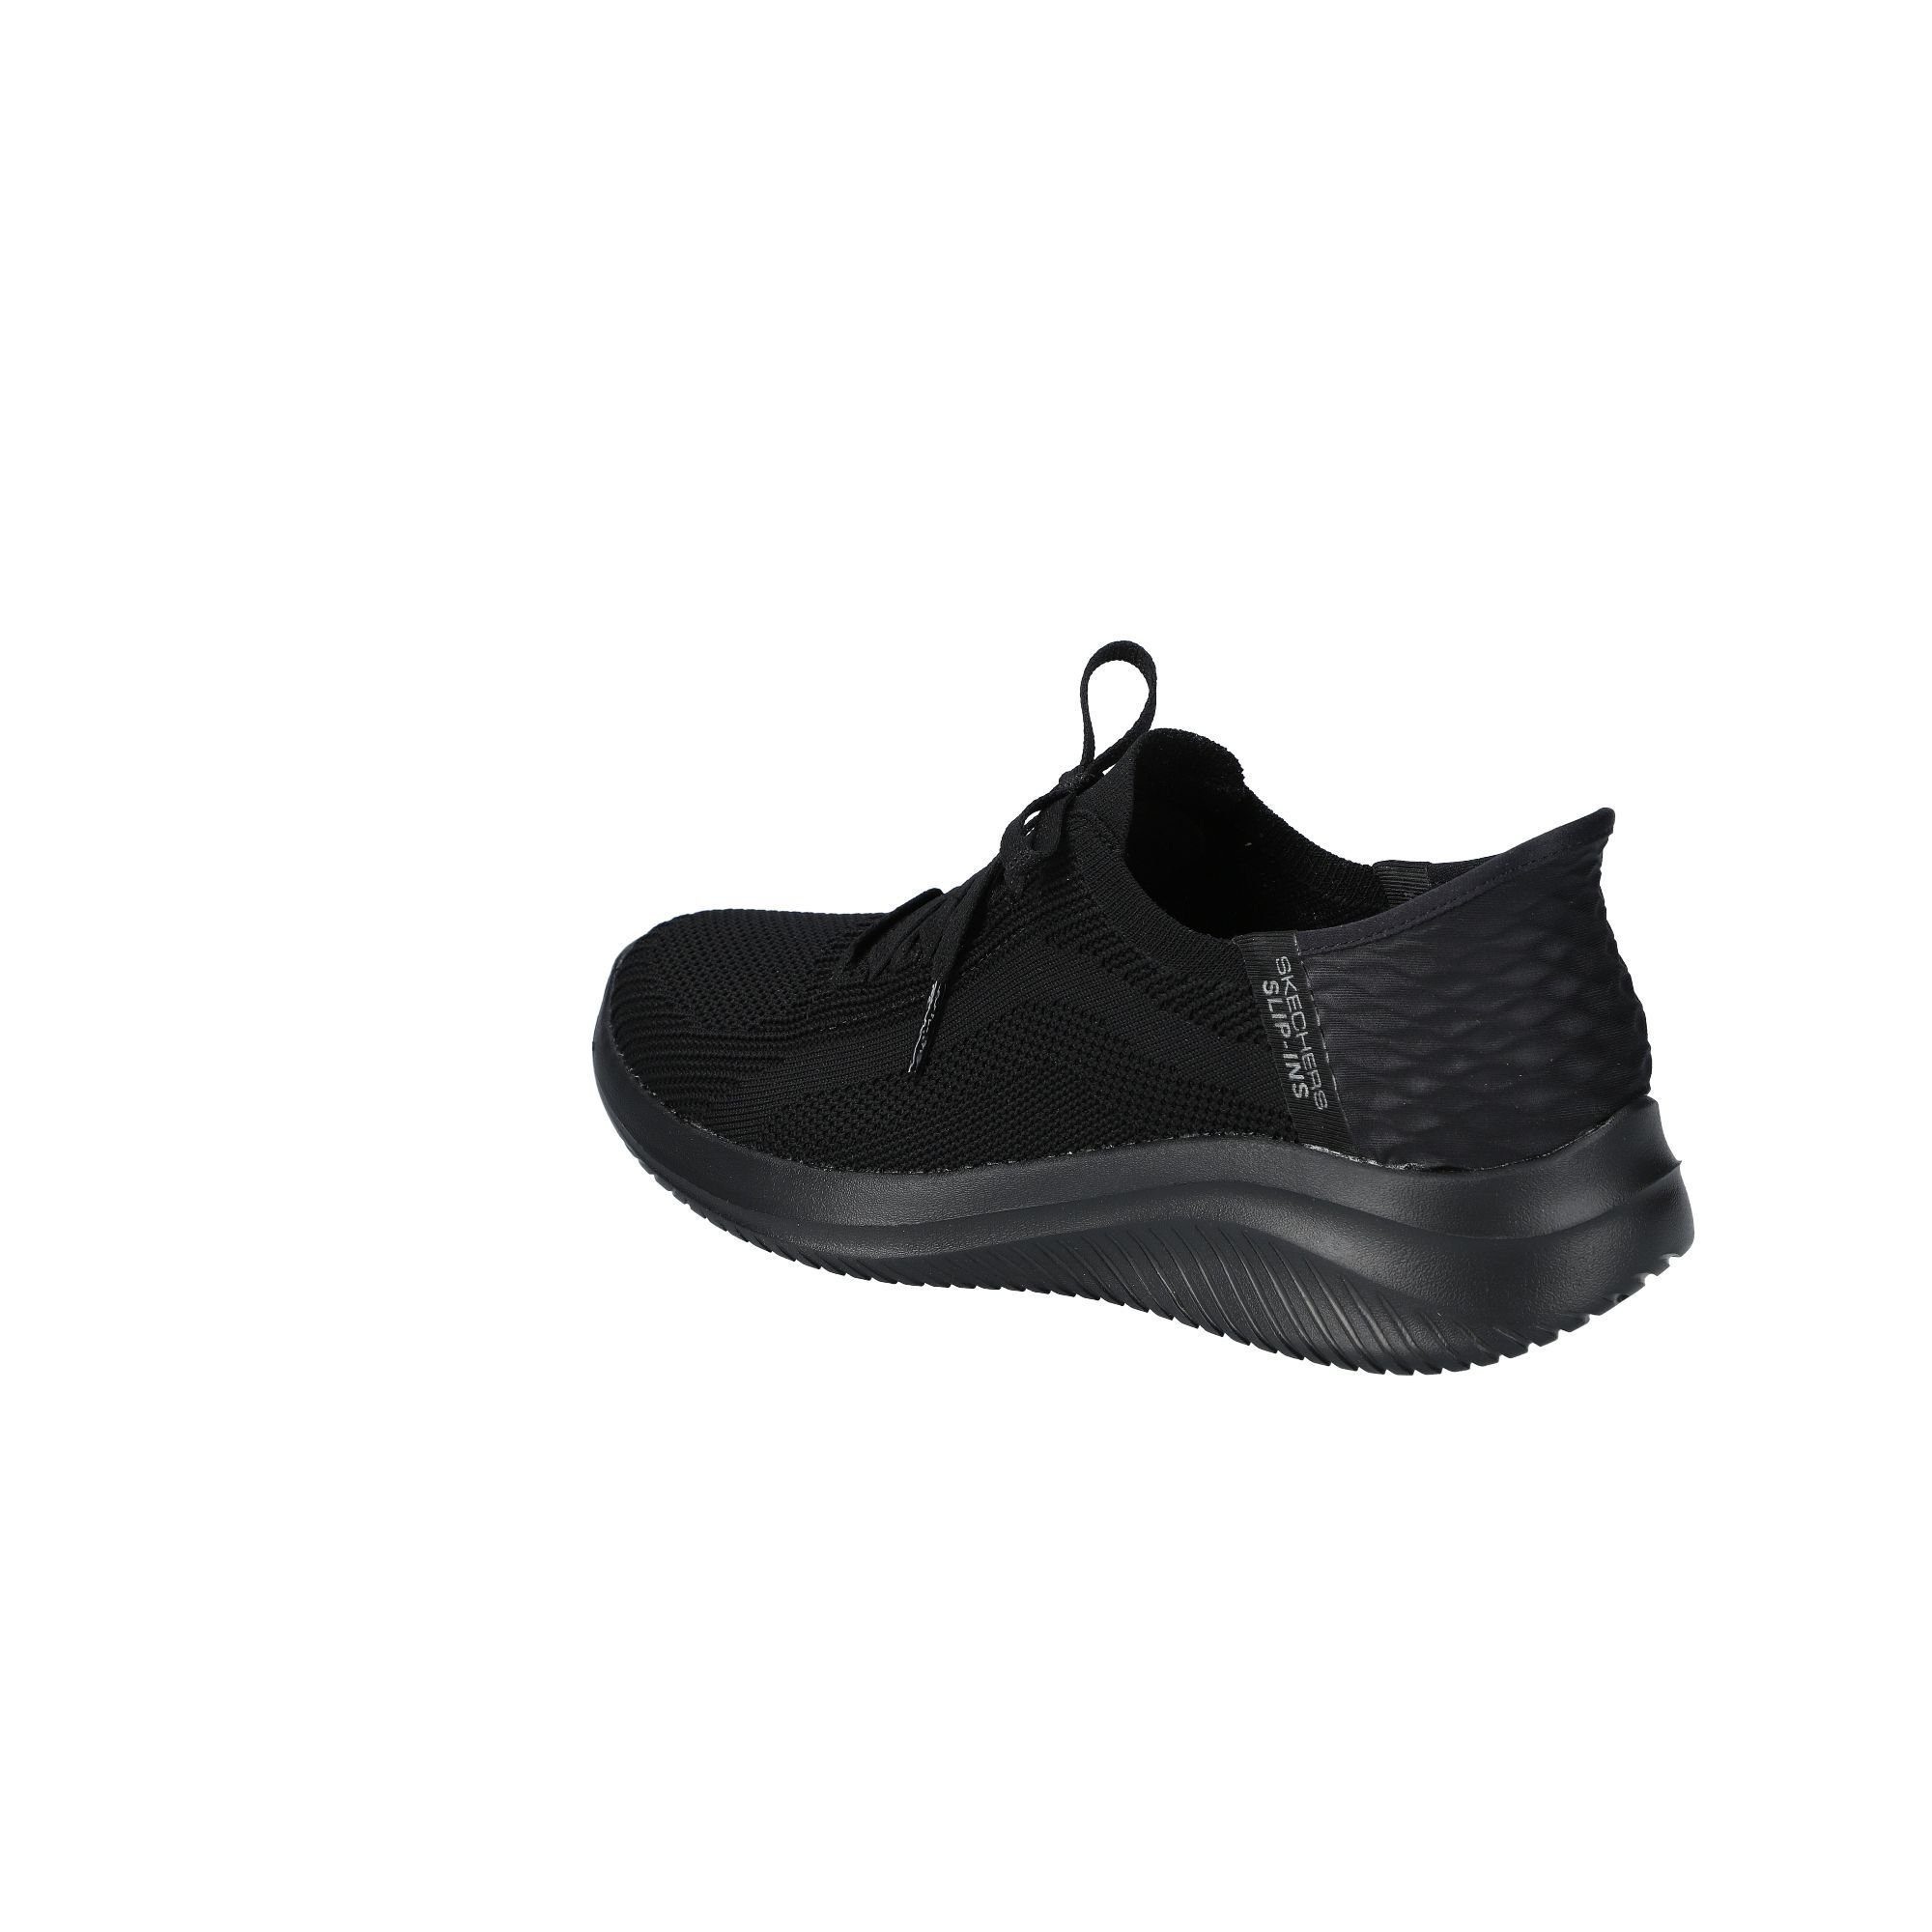 Skechers ULTRA FLEX 3.0 - BRILLIANT PATH Sneaker black